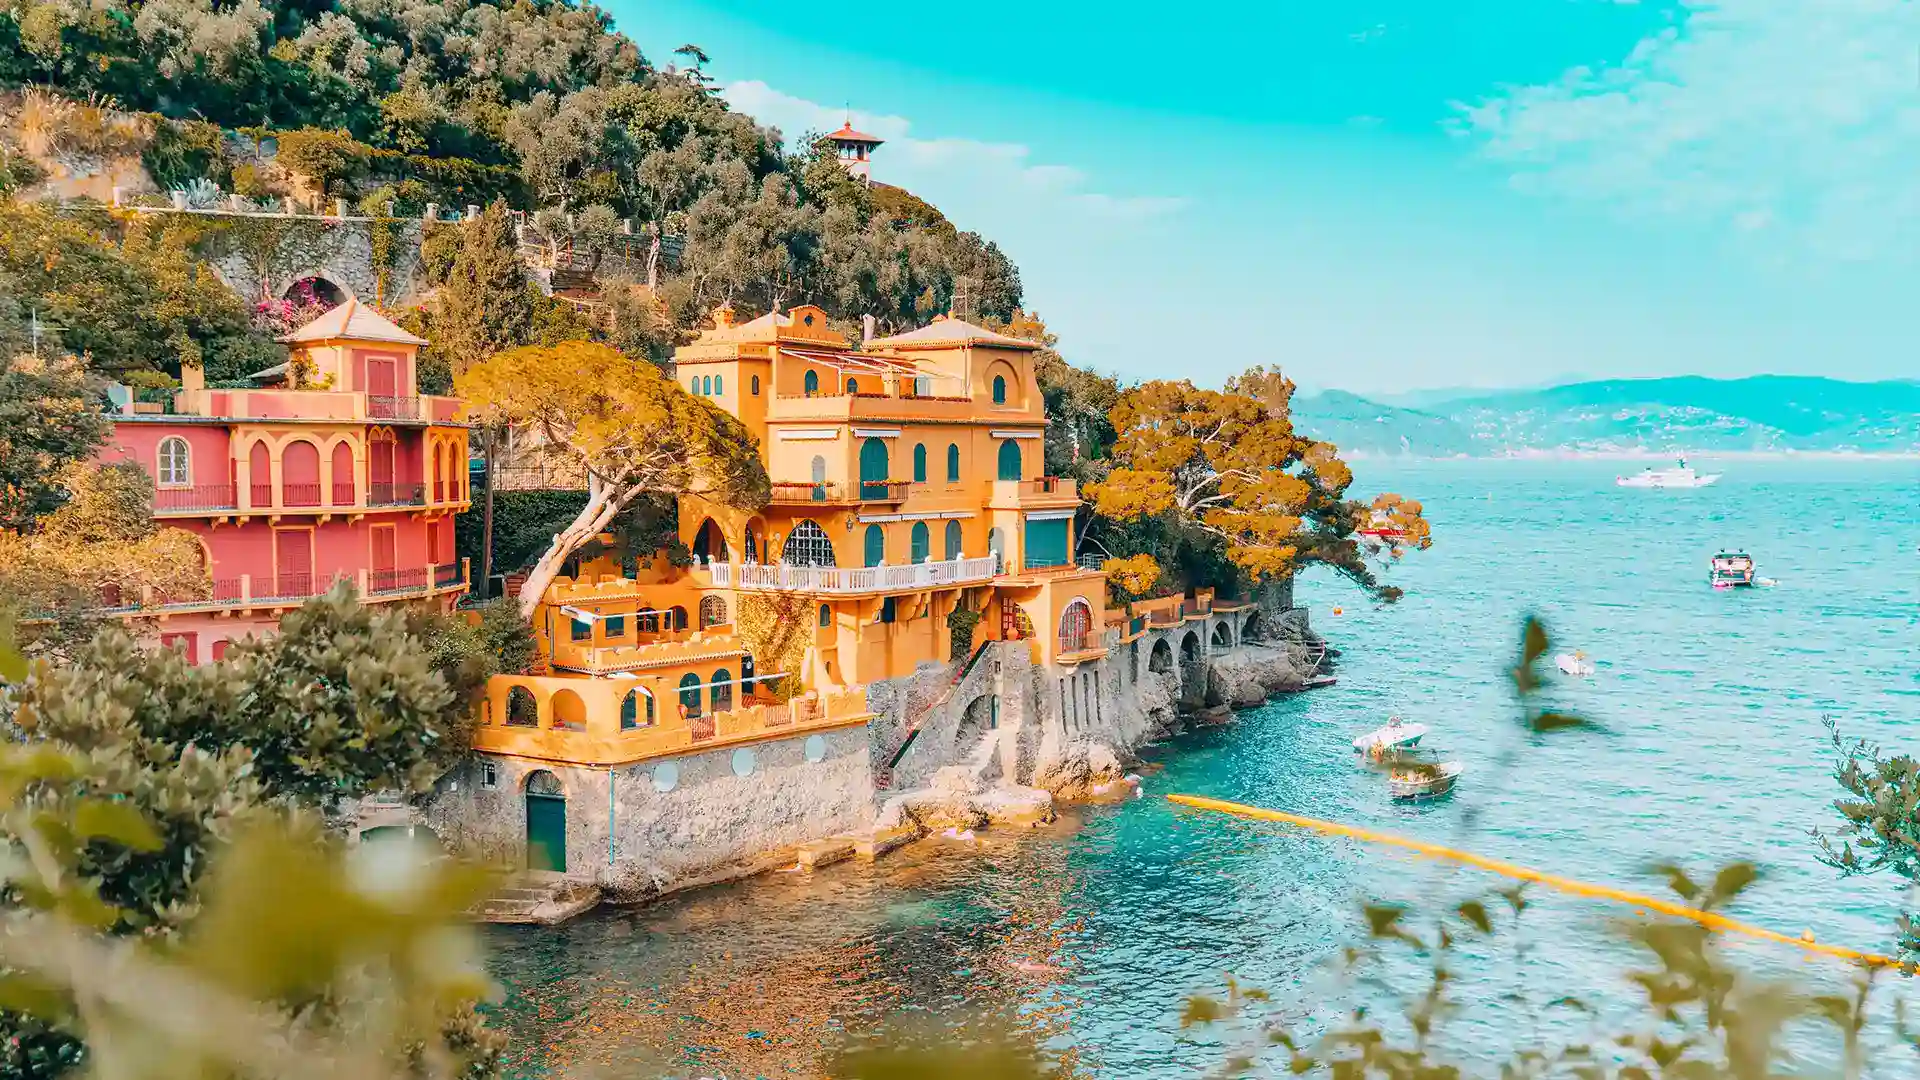 Seaside villas in Portofino Italy.